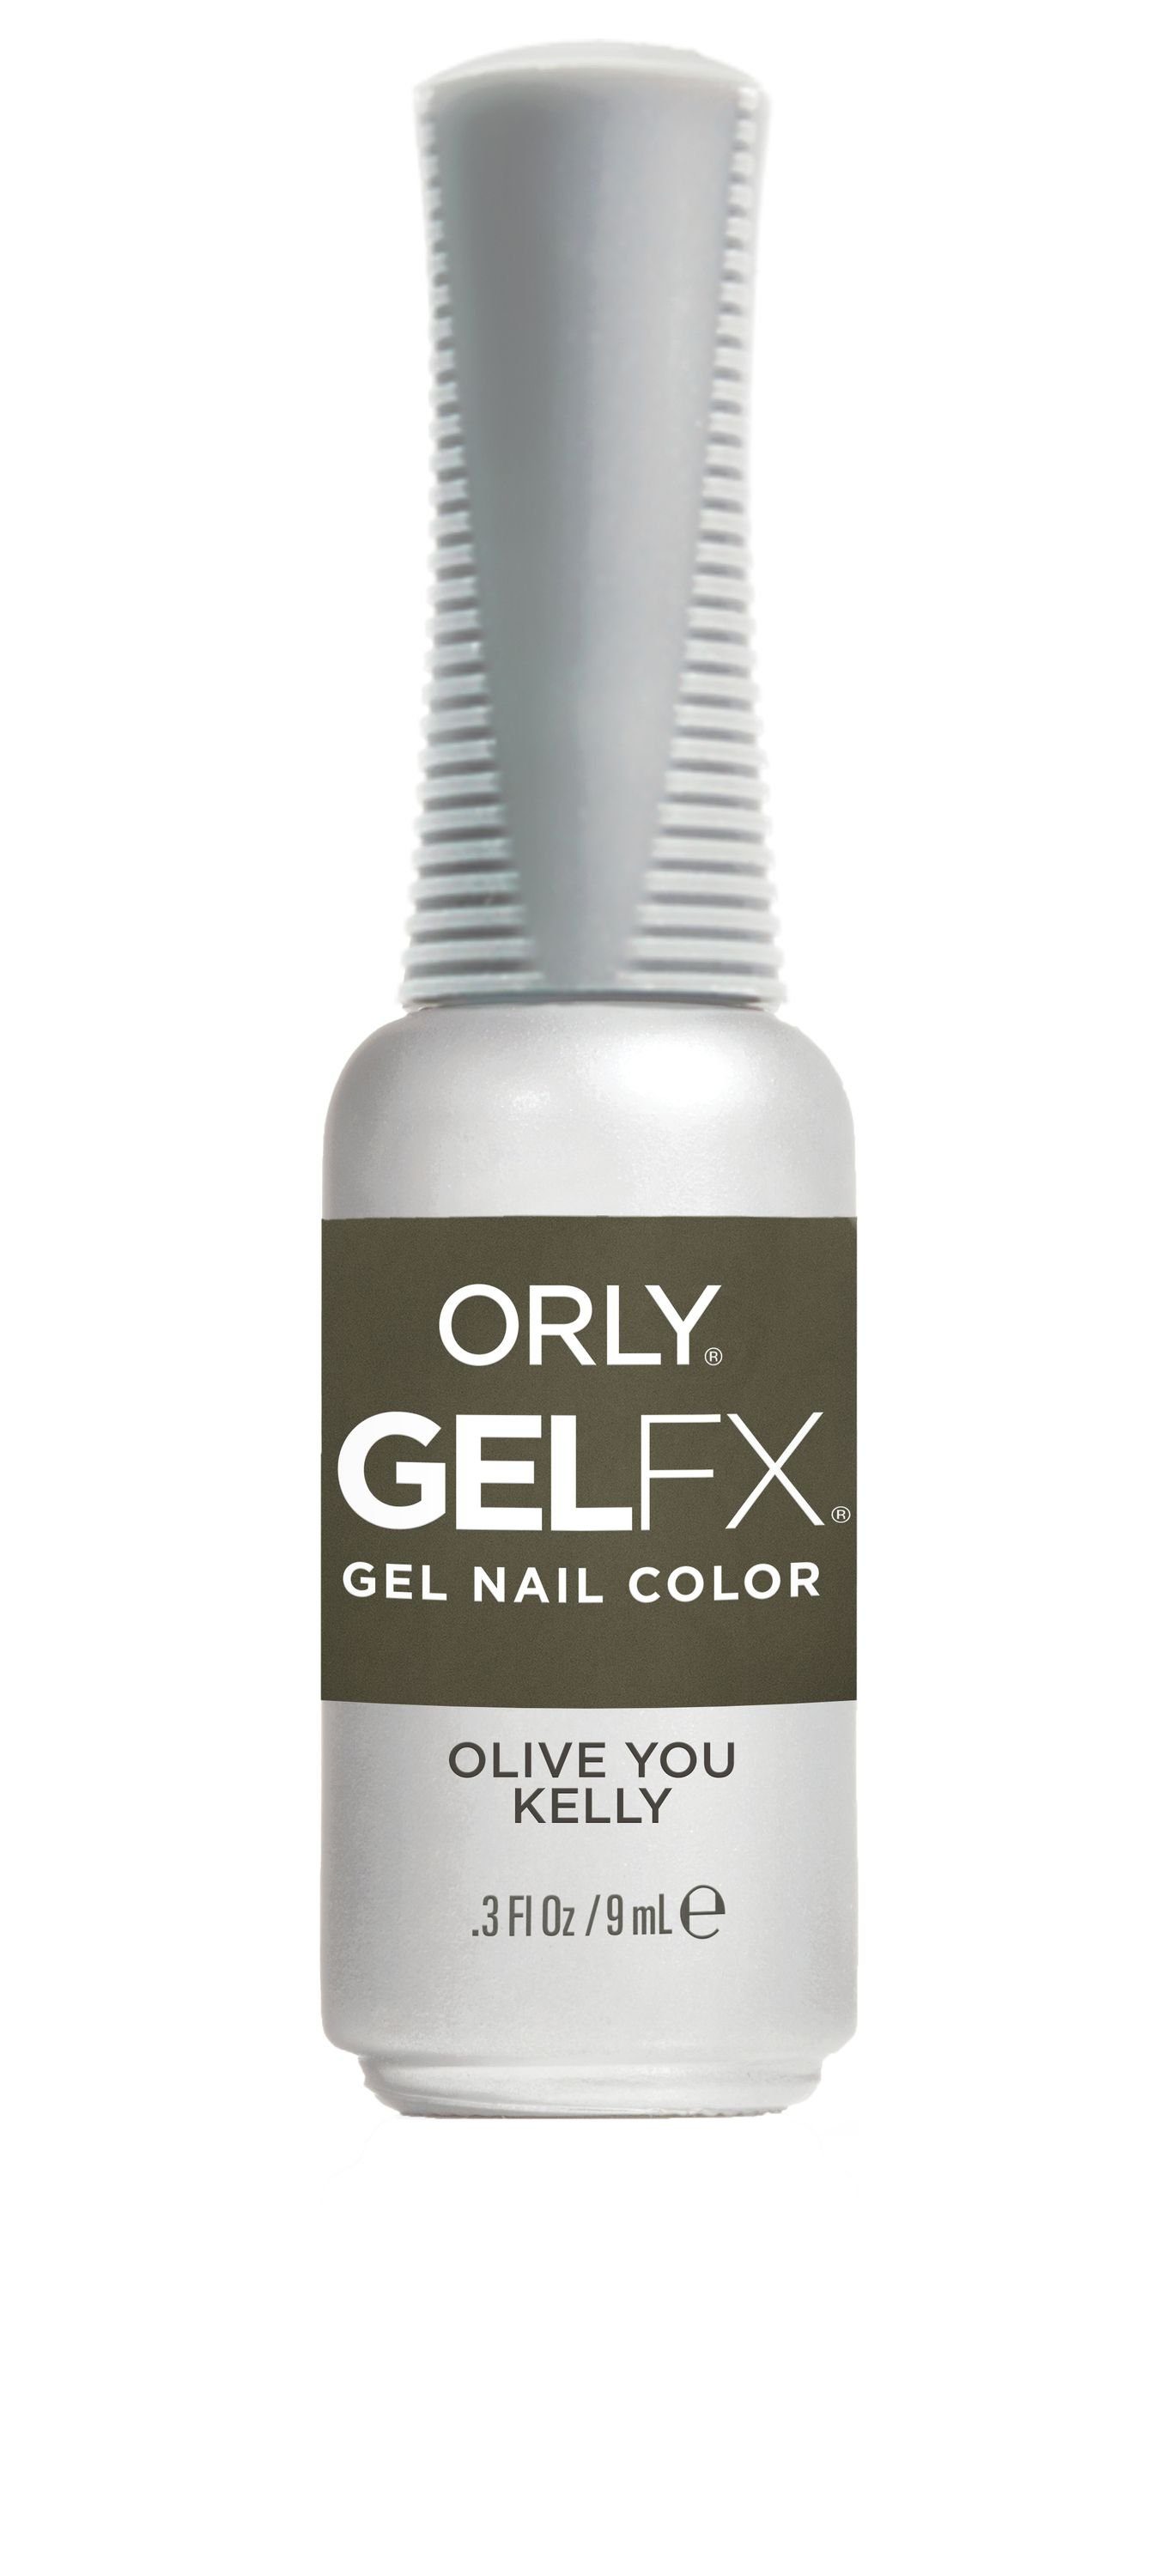 ORLY UV-Nagellack GEL FX Olive You Kelly*, 9ML